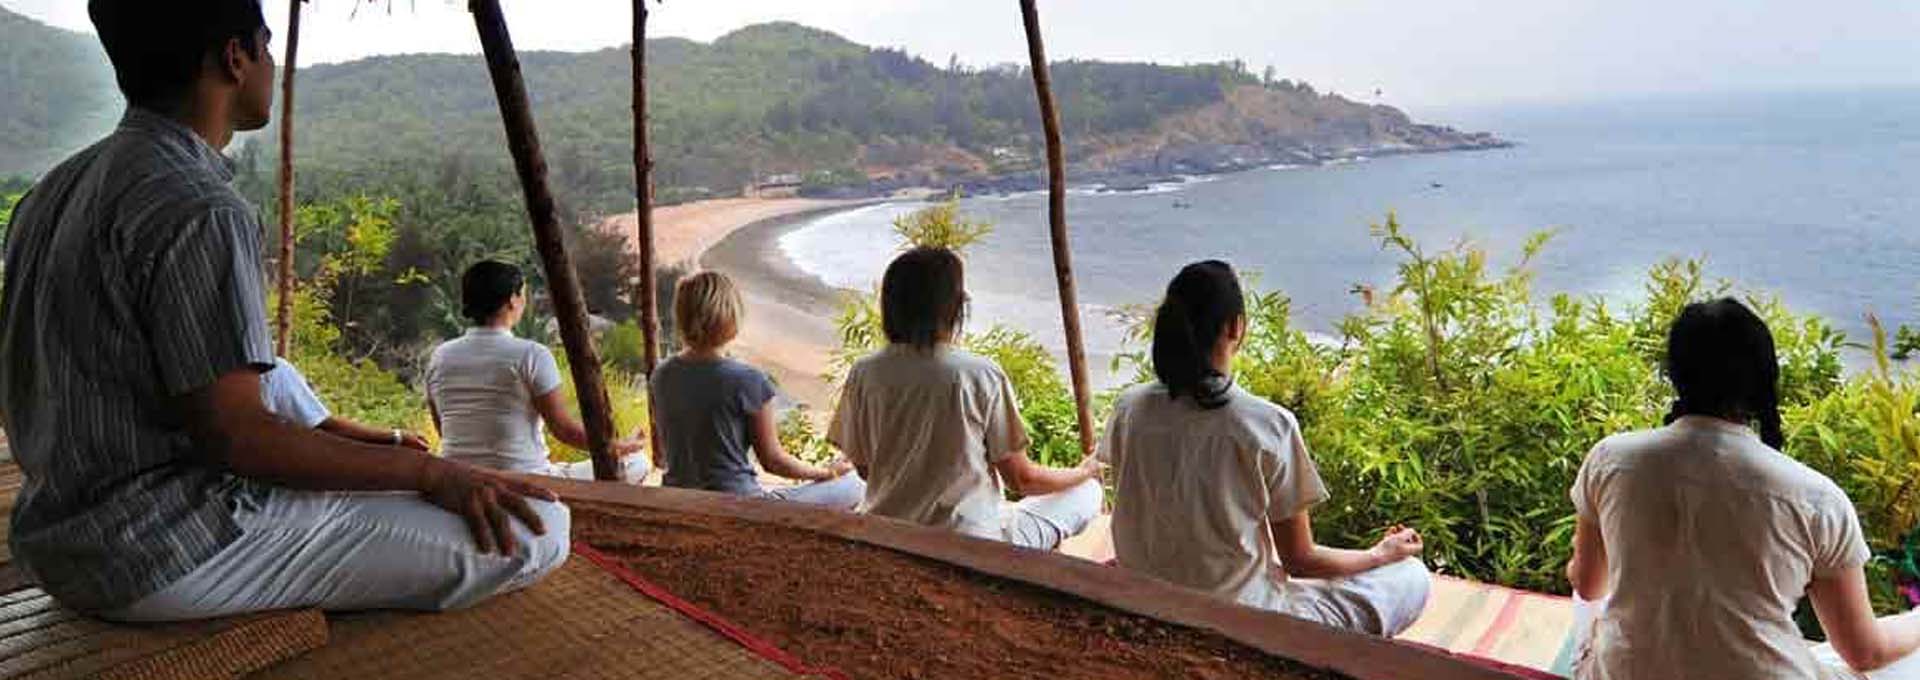 Yoga Retreat Tour in India Banner 3